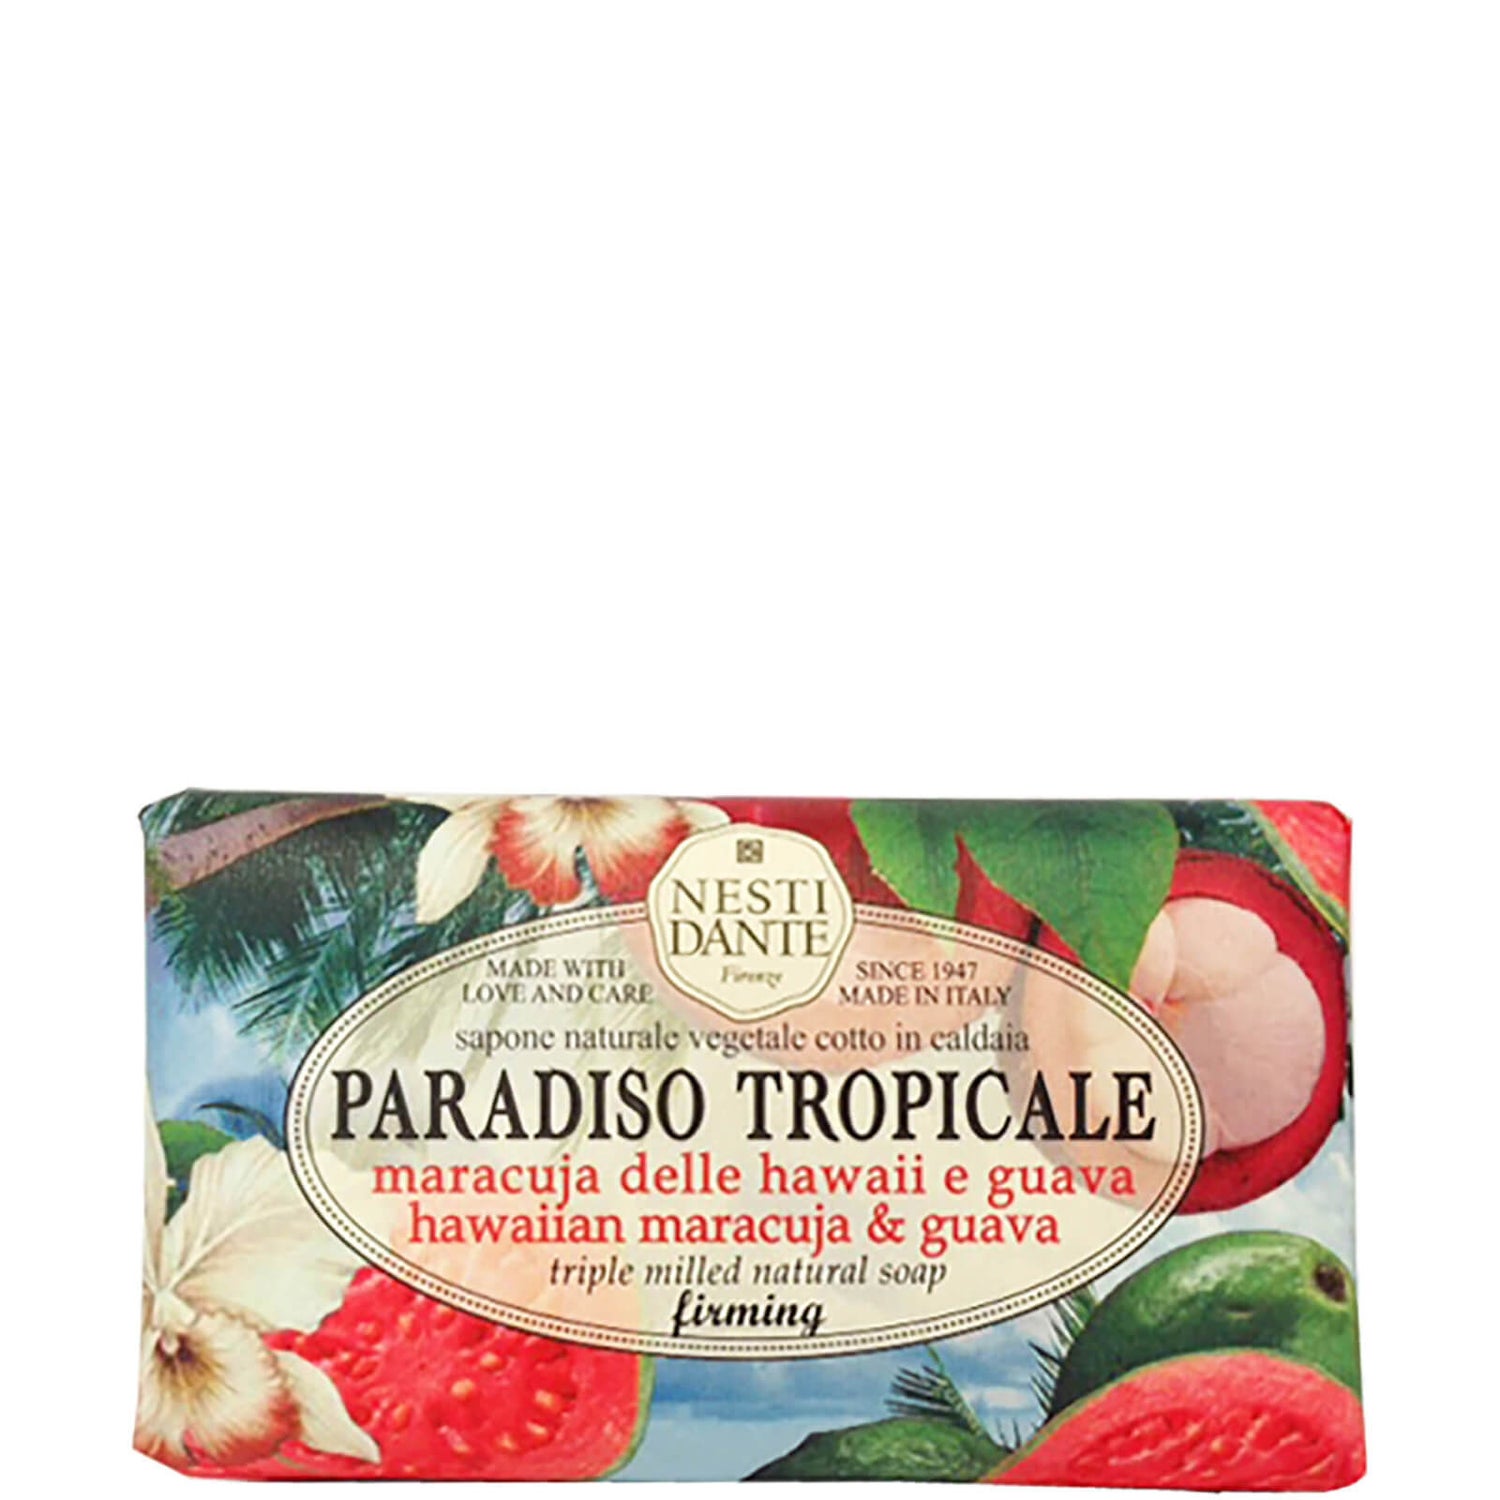 Sabonete Paradiso Tropicale Hawaiian Maracujá Havaiano e Guava da Nesti Dante 250 g